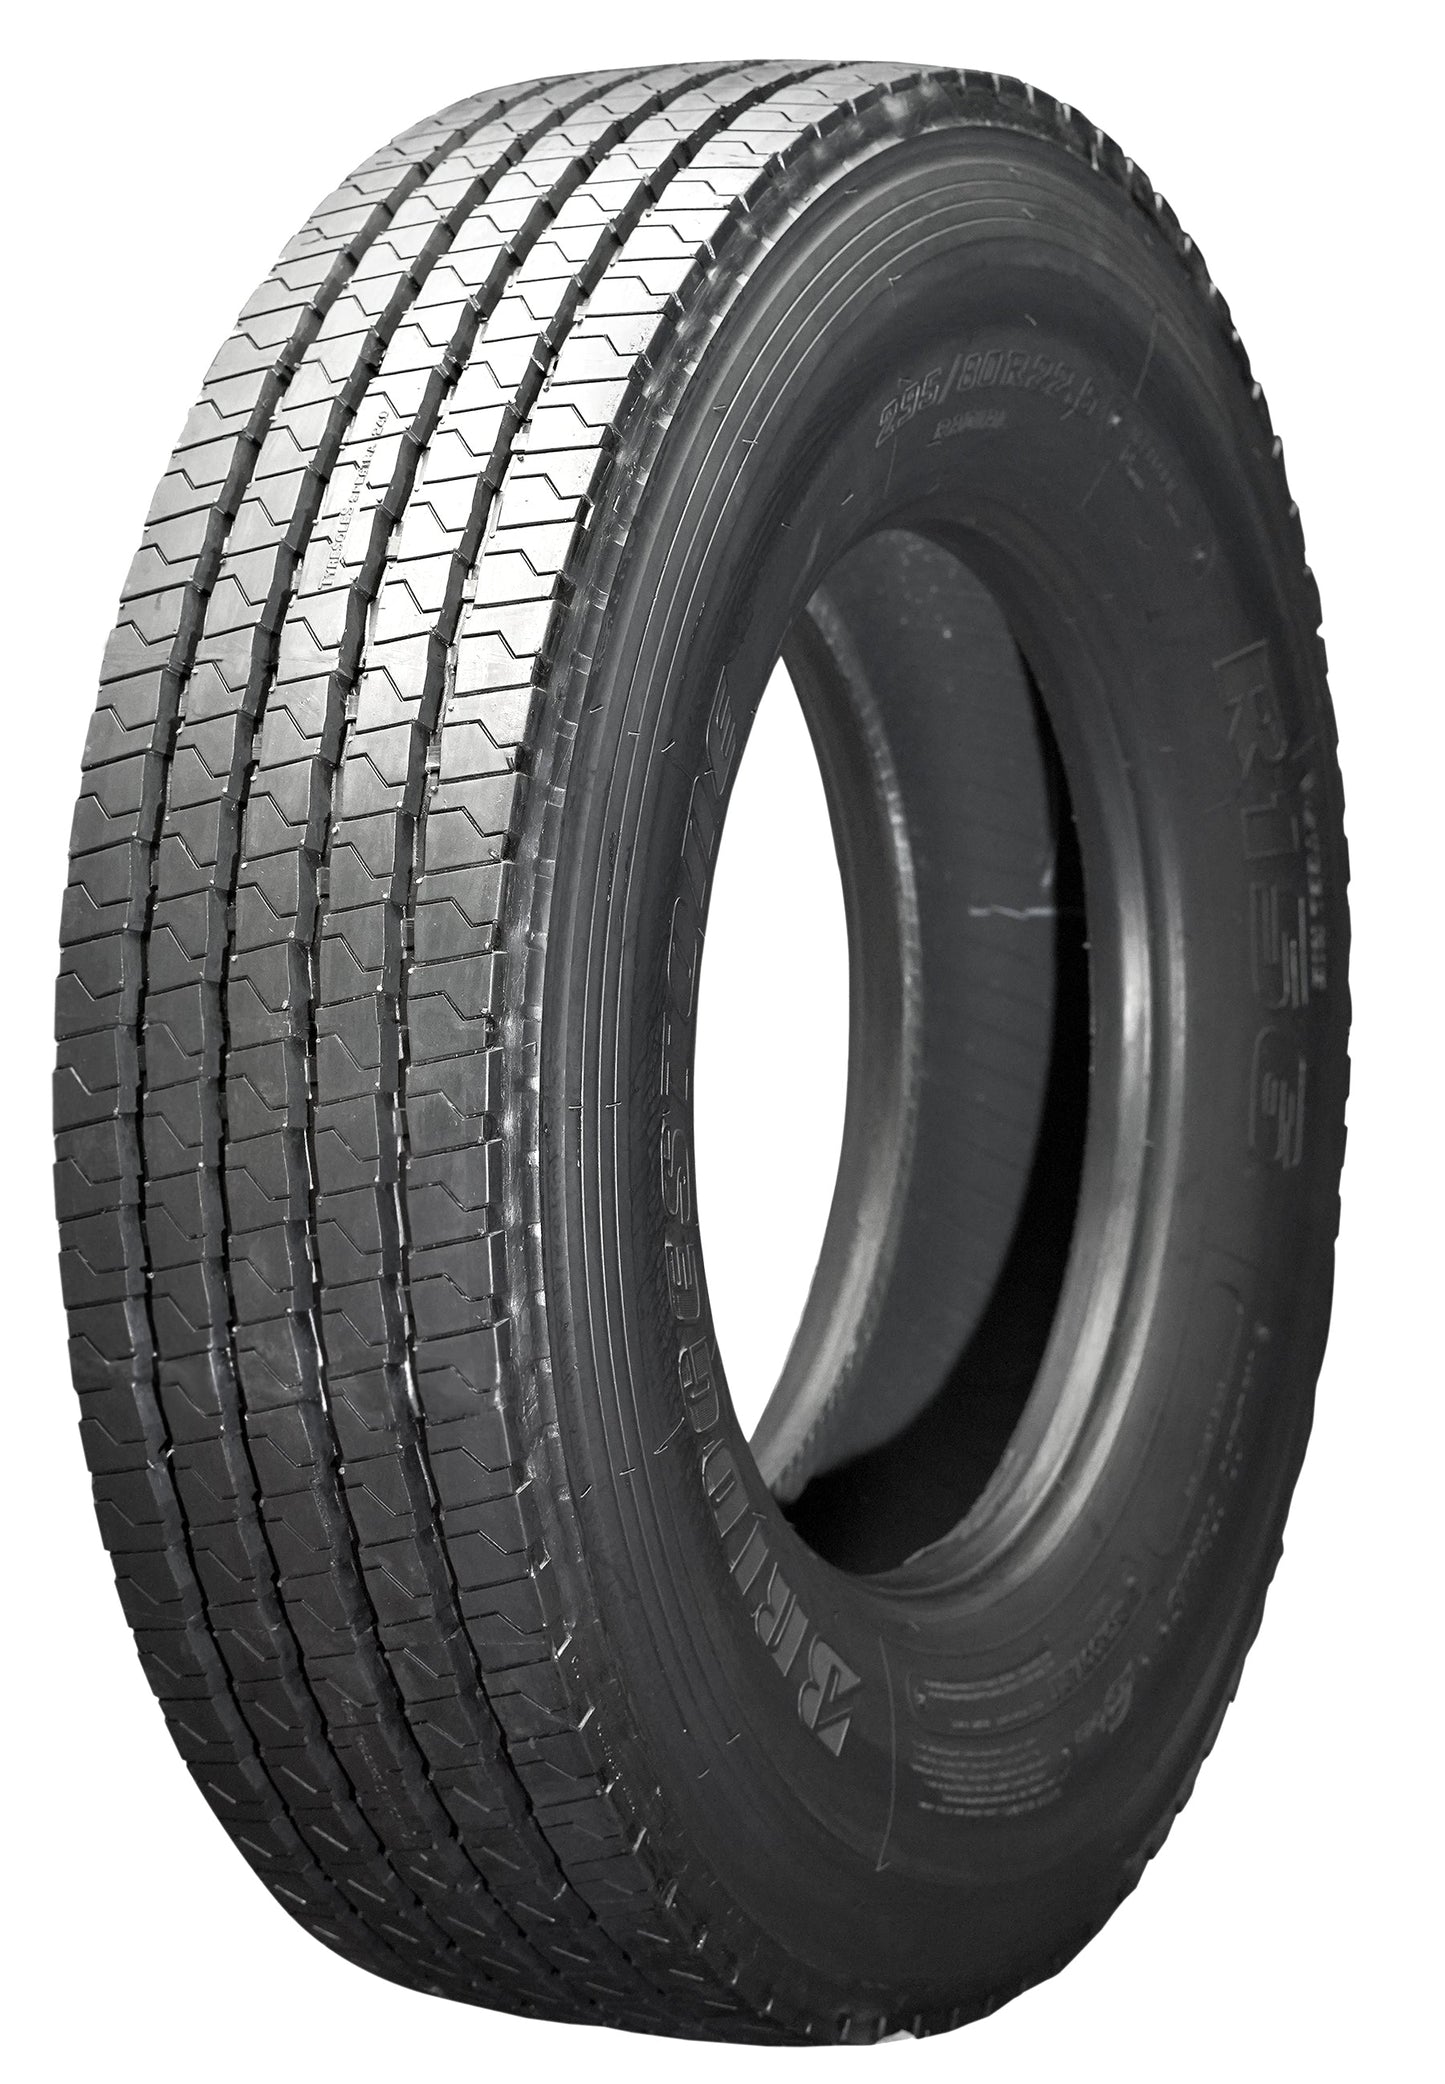 Tyresoles Ecomiles Certified Retreaded LCV Tyres 7.50*16